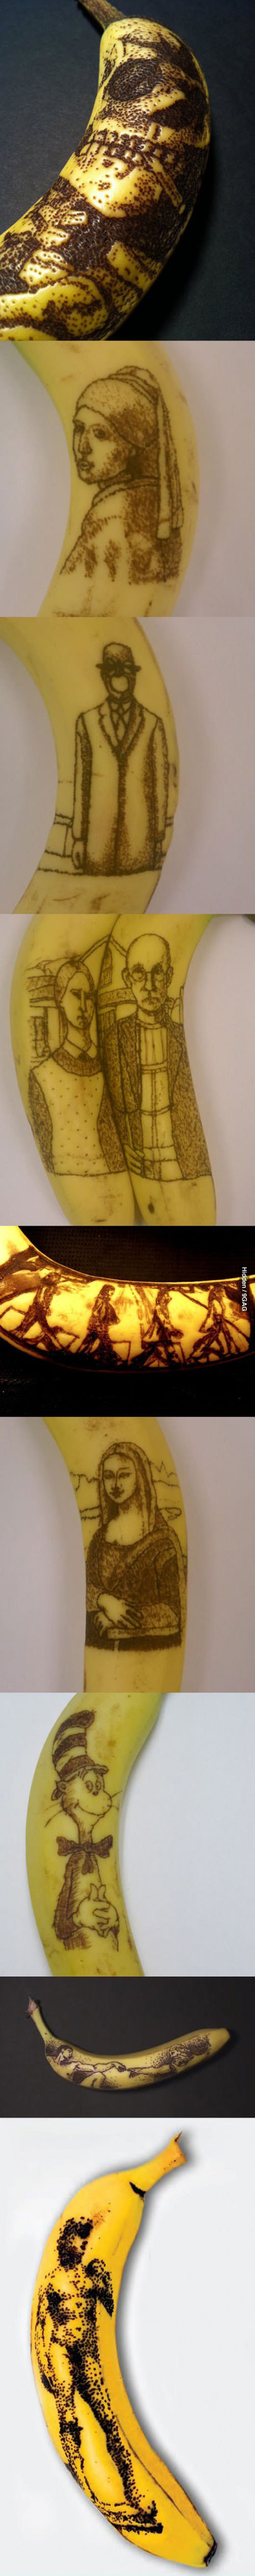 art, banana, oxidation, bruise, compilation, long